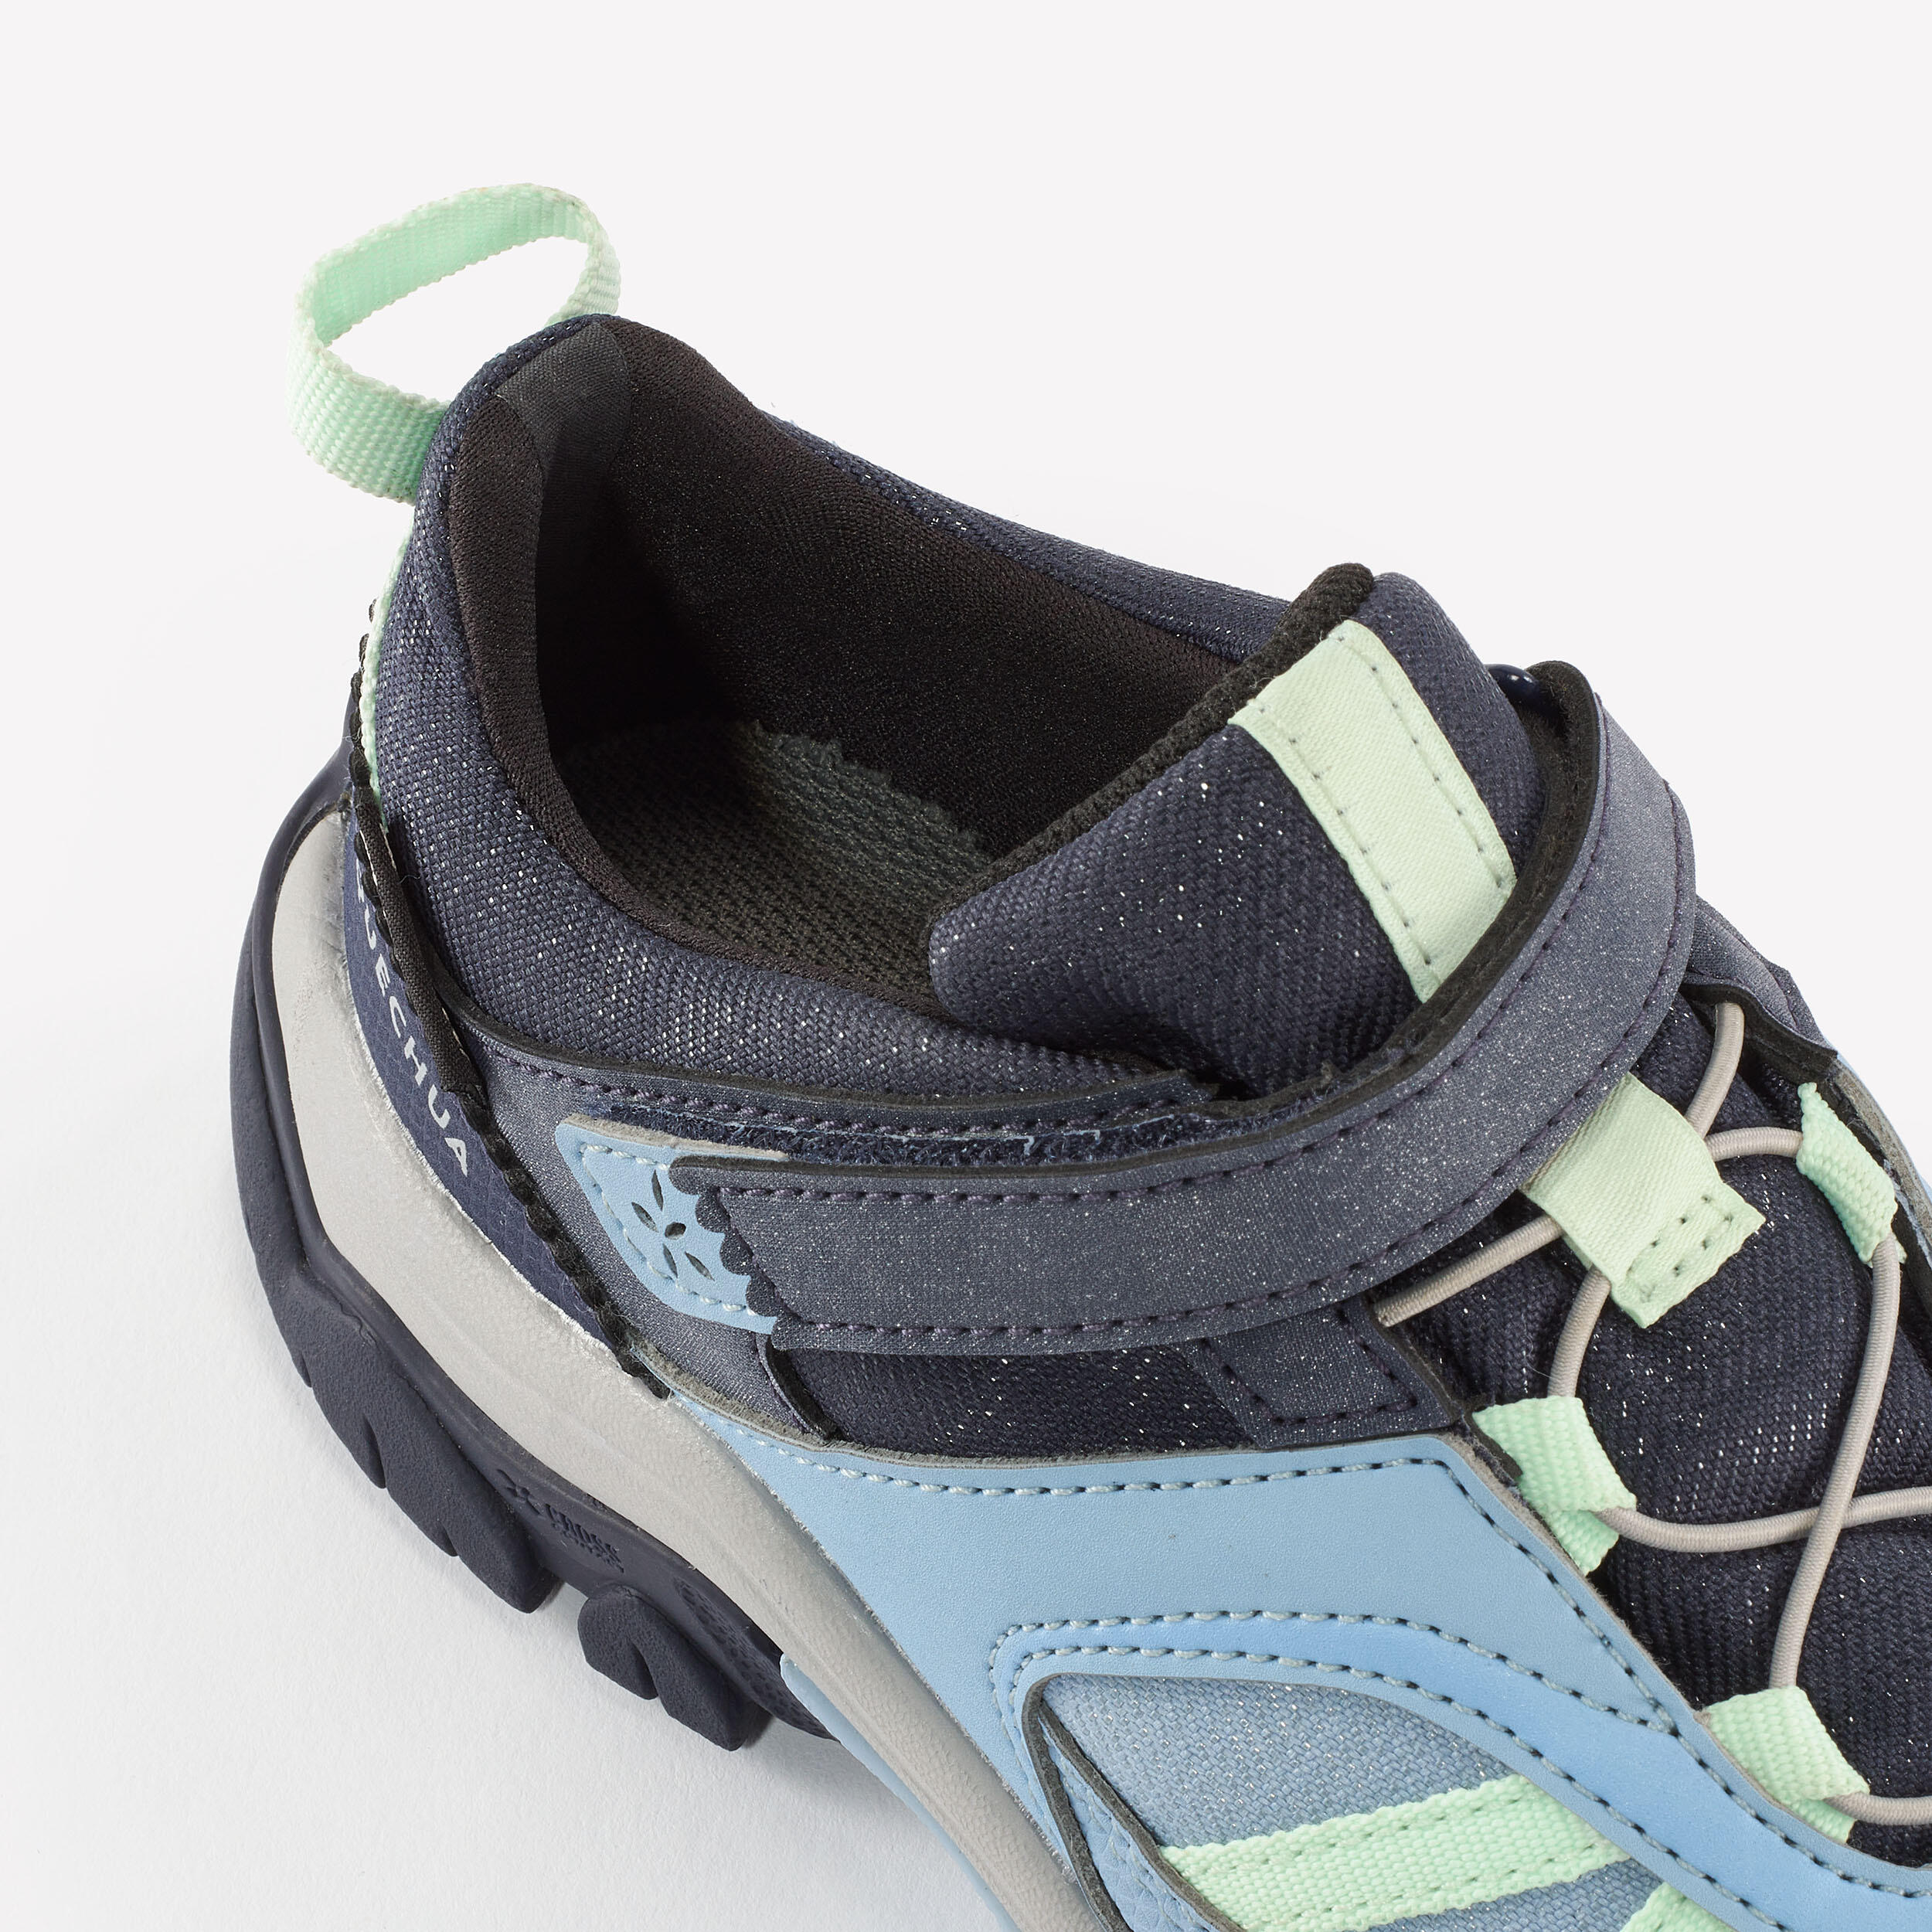 Children's Waterproof Hiking Boots - CROSSROCK light blue - 28–34 8/10